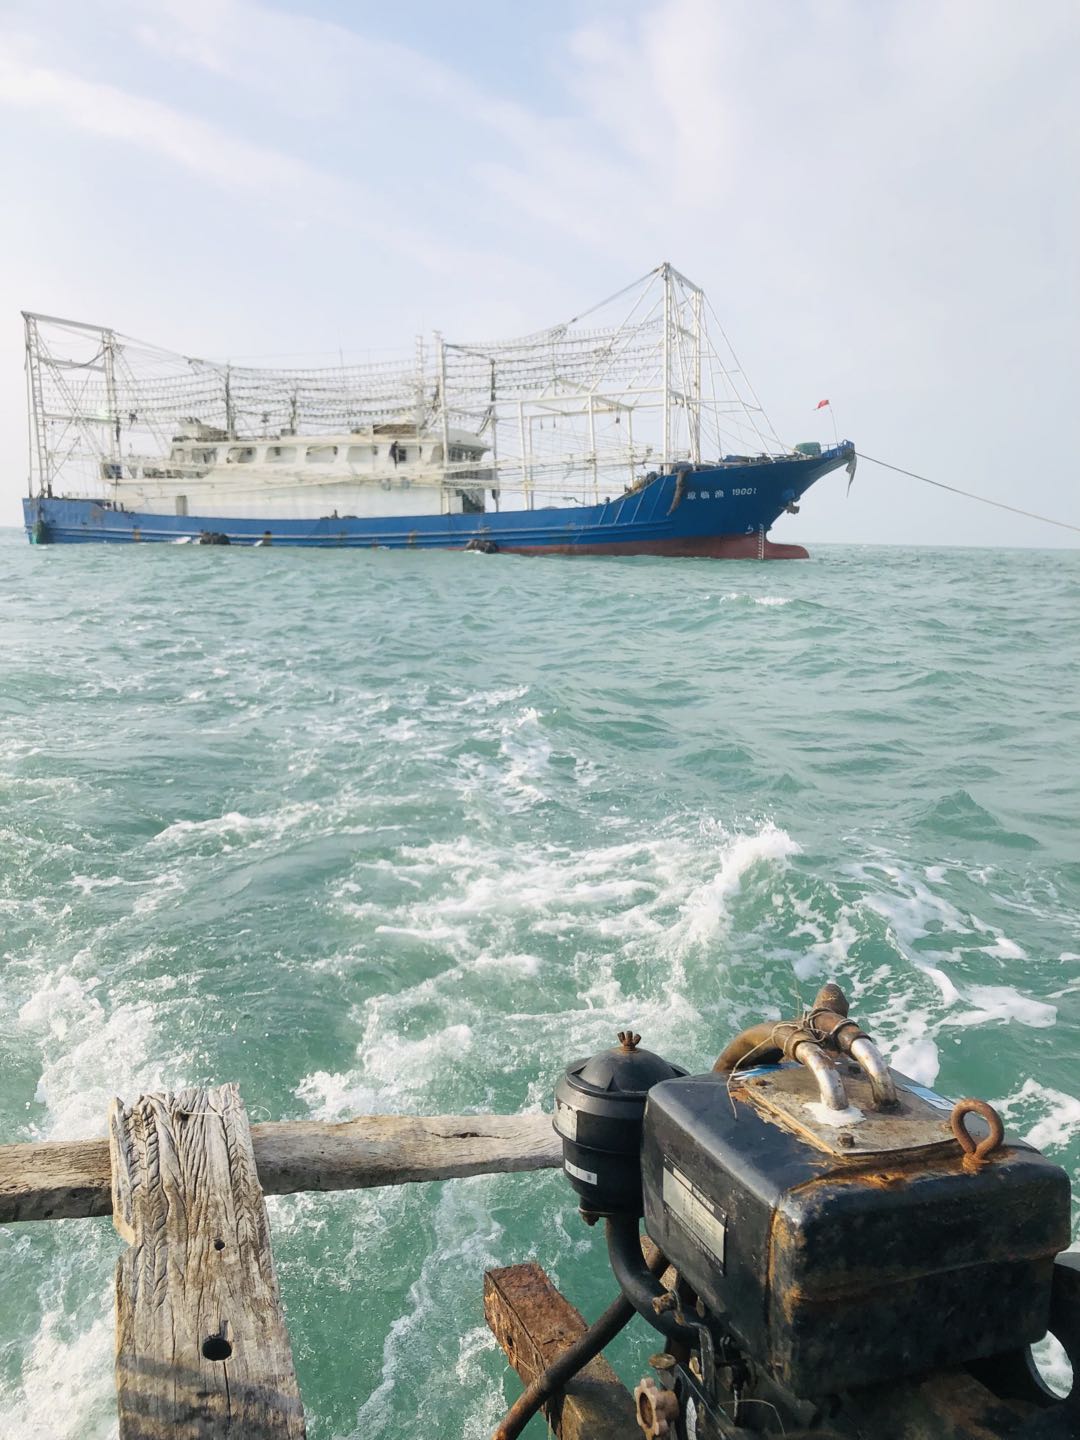 Install Fishing Light Boat in Hainan China